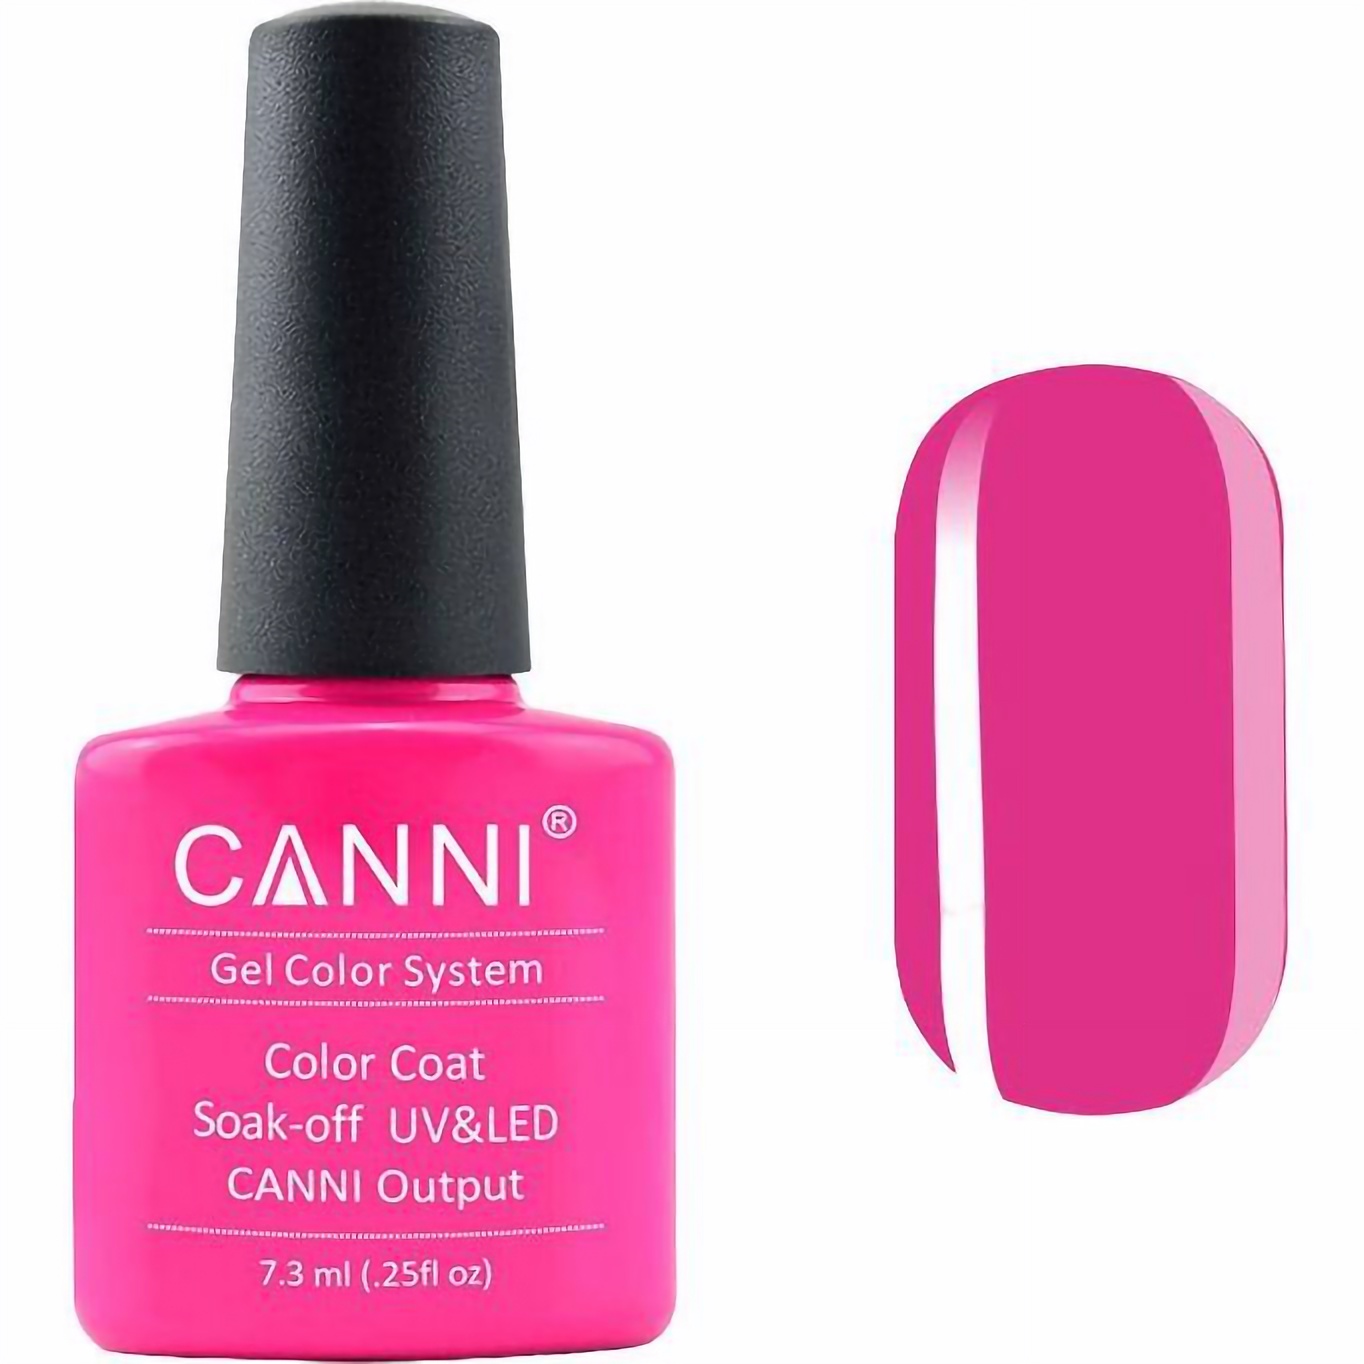 Гель-лак Canni Color Coat Soak-off UV&LED 51 малиновый 7.3 мл - фото 1